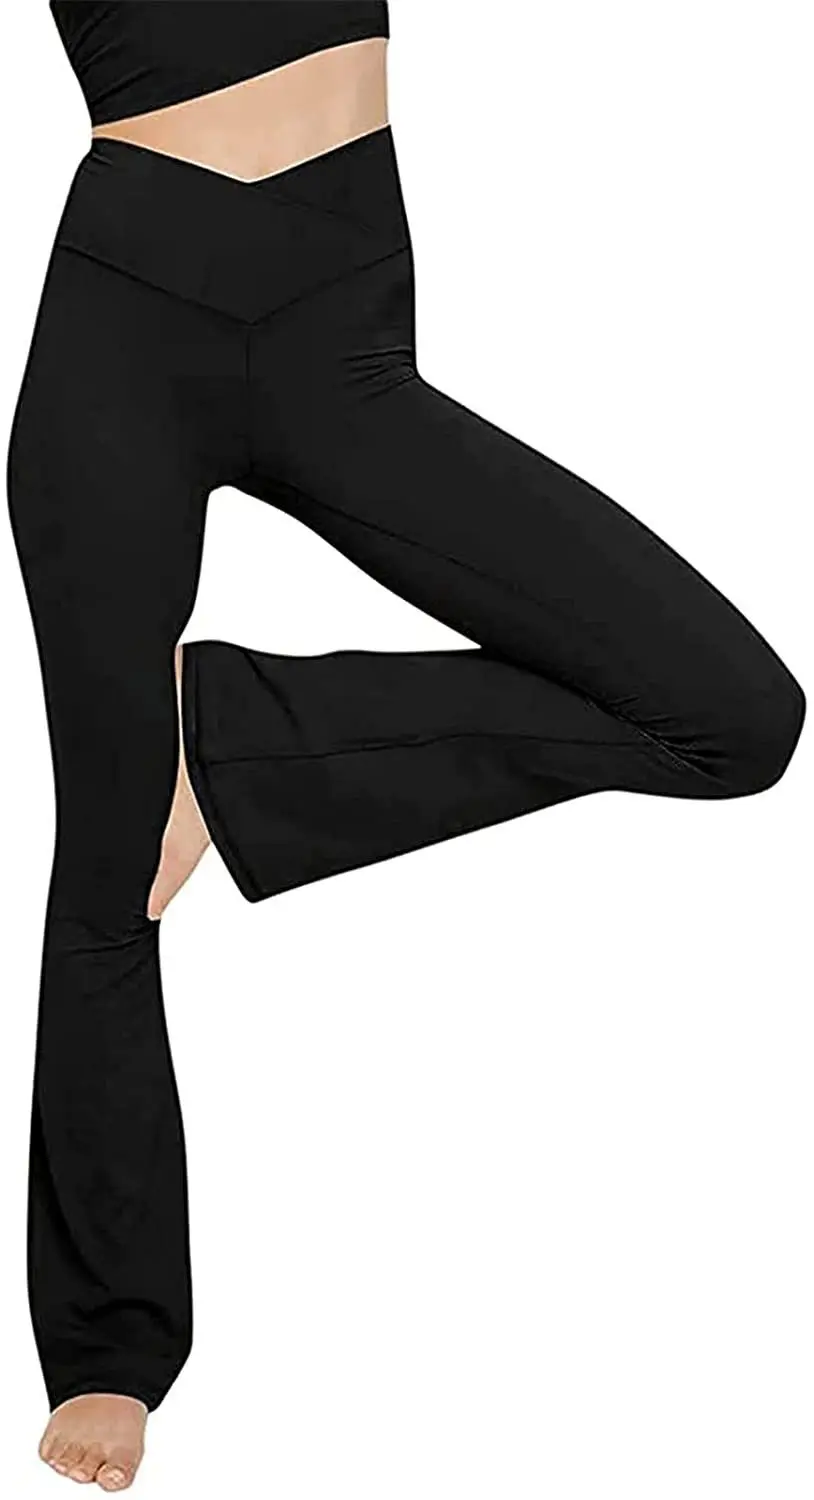 New Wide Leg Sport Pants Women High Waist Stretch Bandage Flare Pants Broad Leg Dance Yoga Pants Long Trousers S-2XL Sports Wear